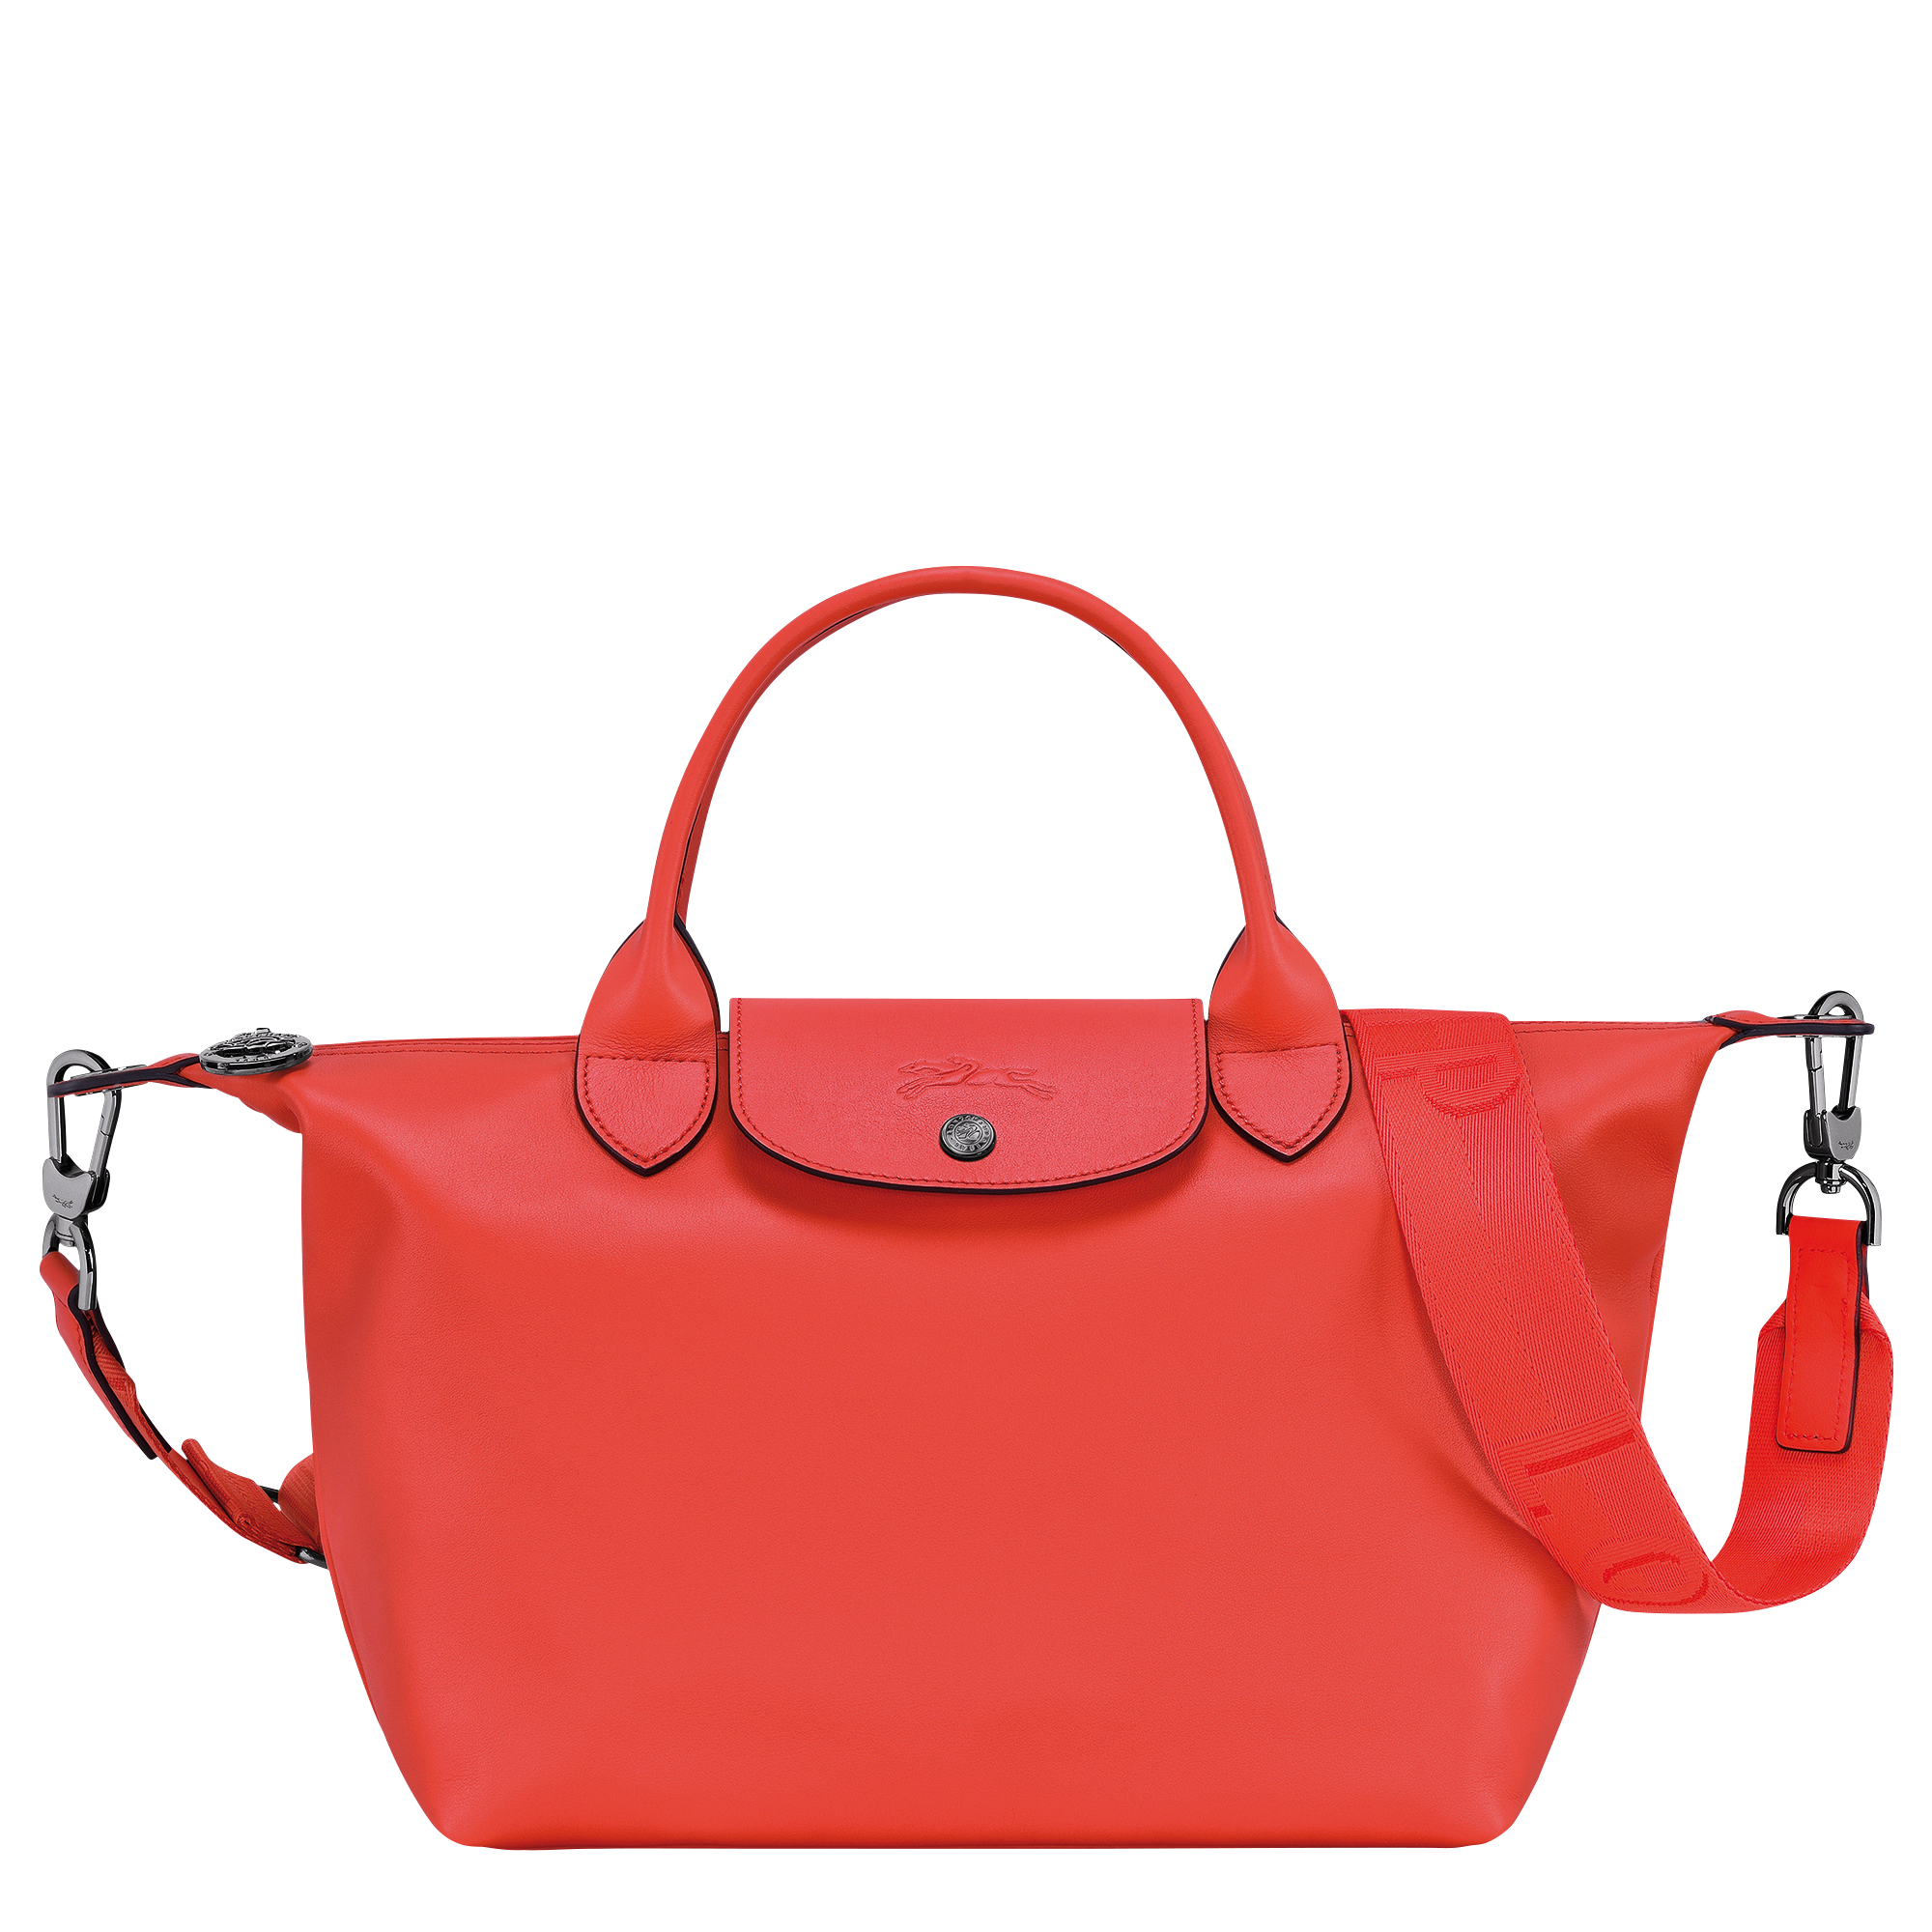 Le Pliage Xtra Handbag S, Orange